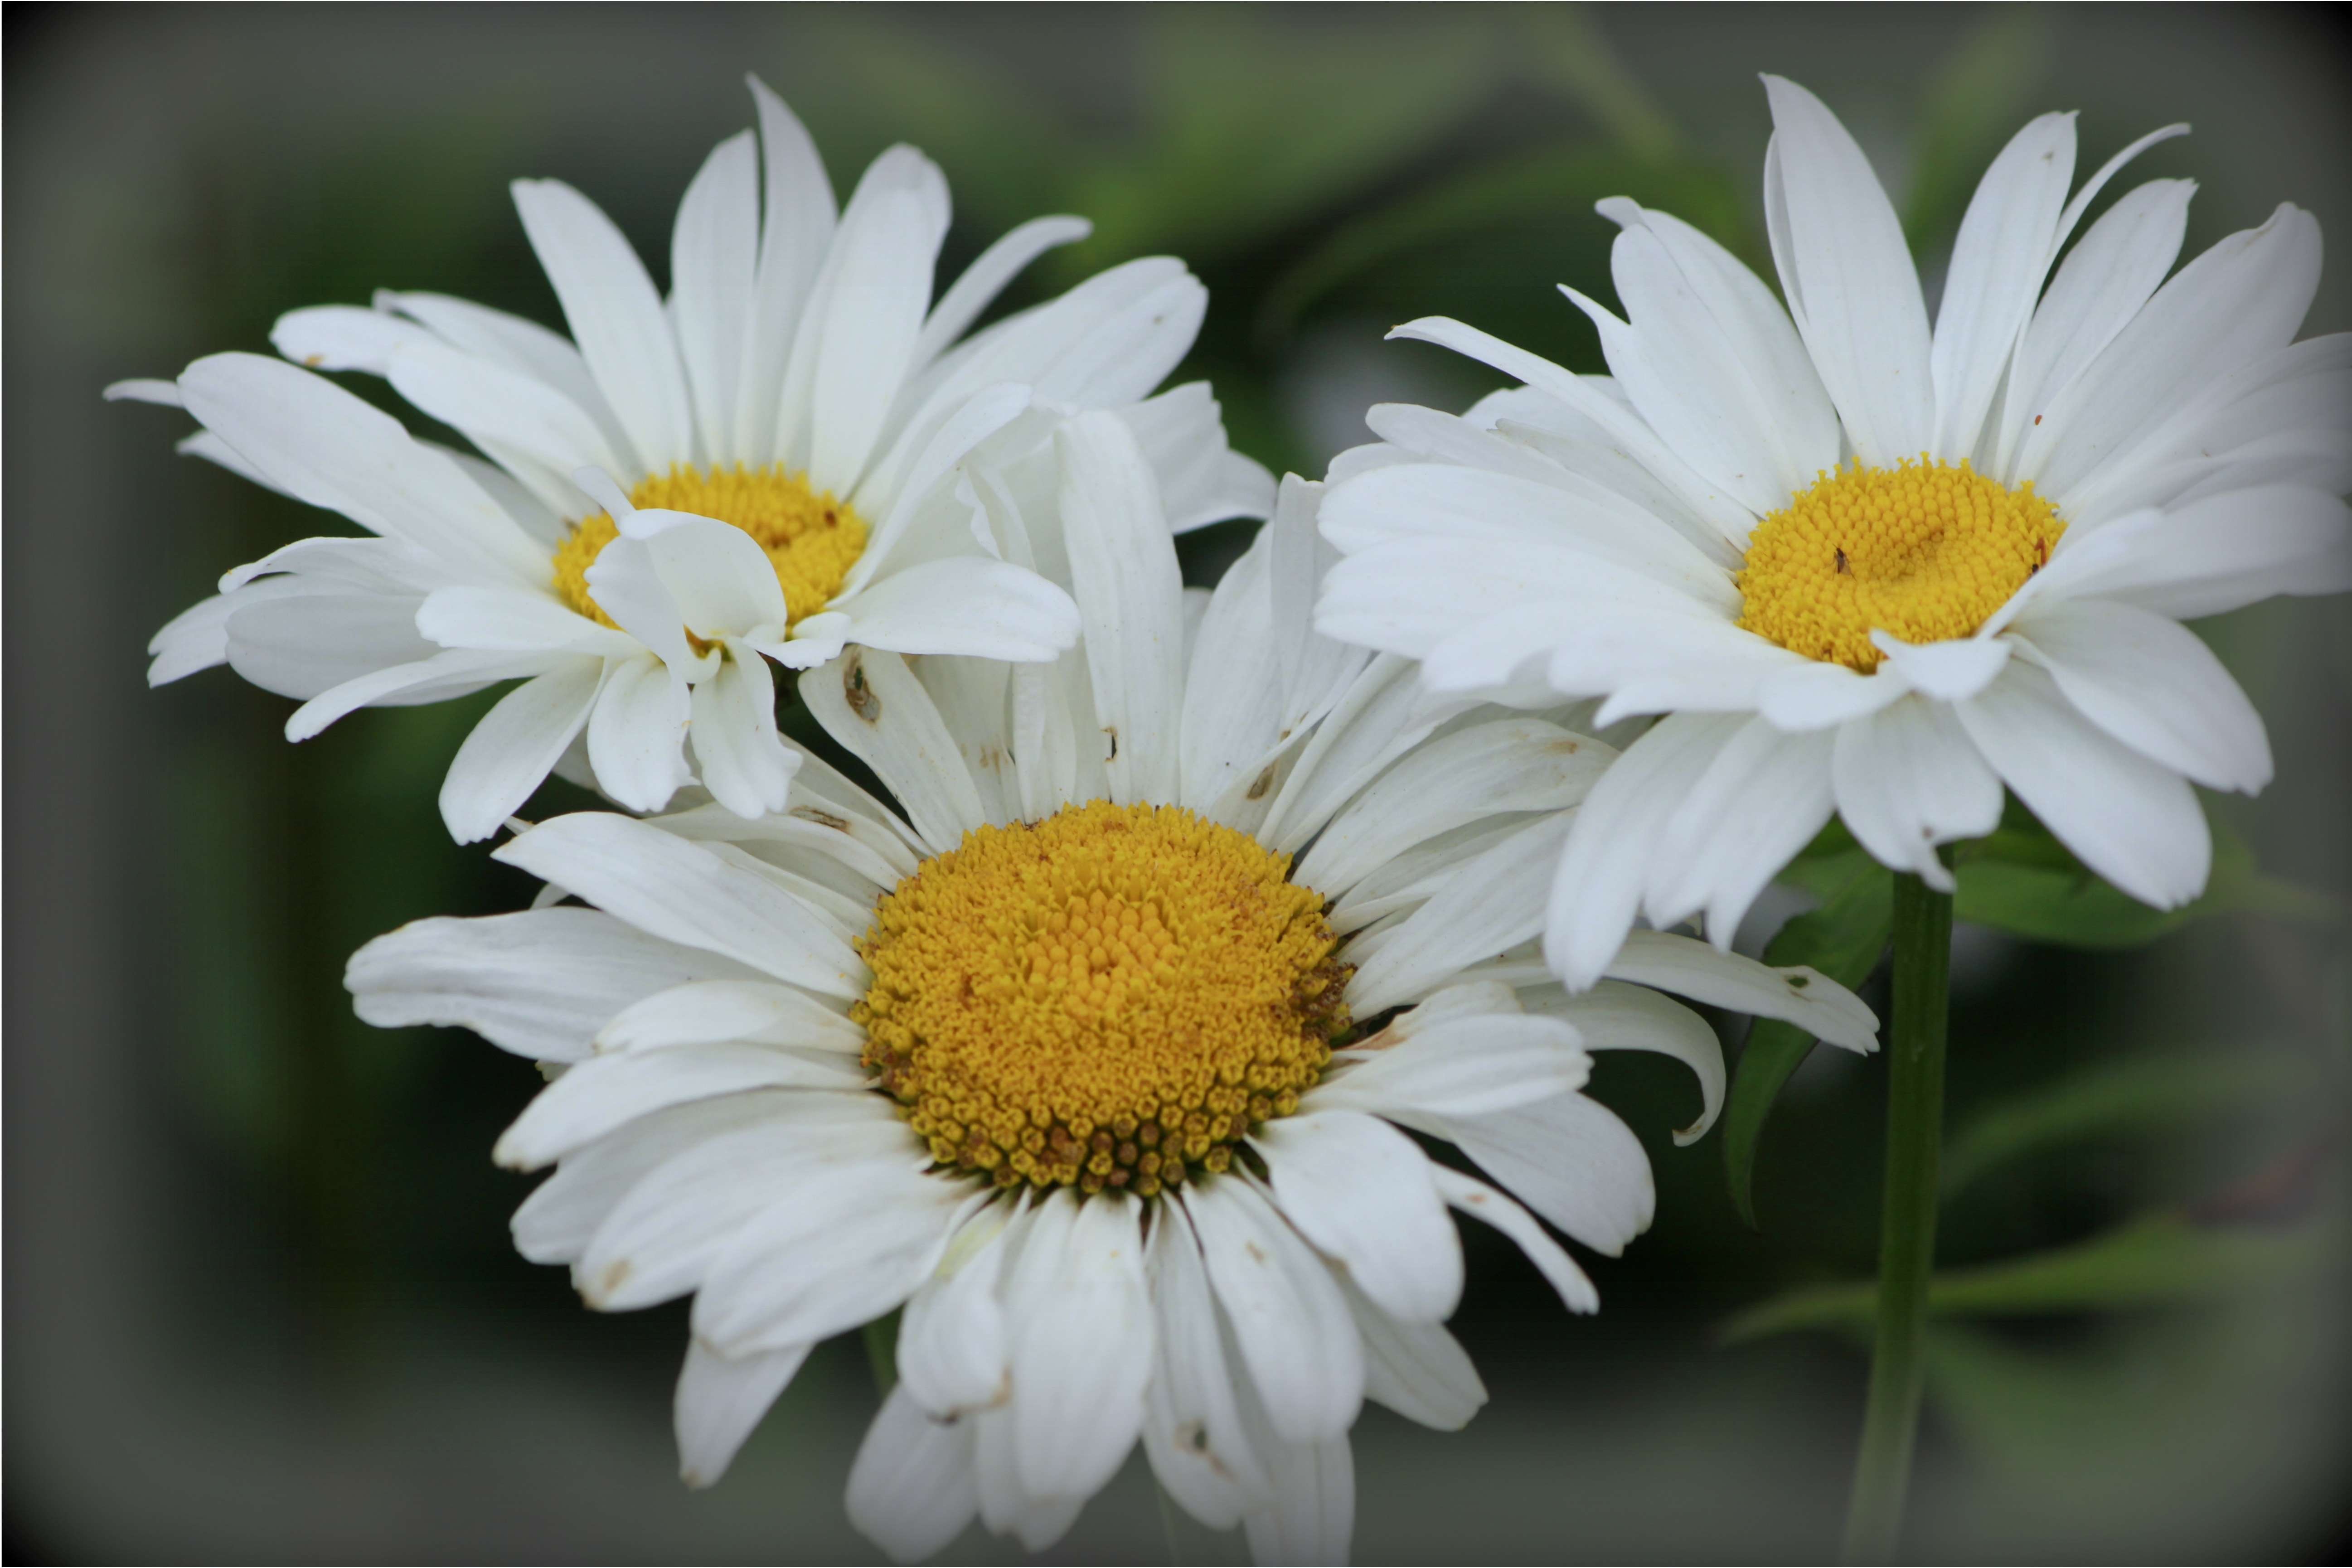 3 white daisy flowers